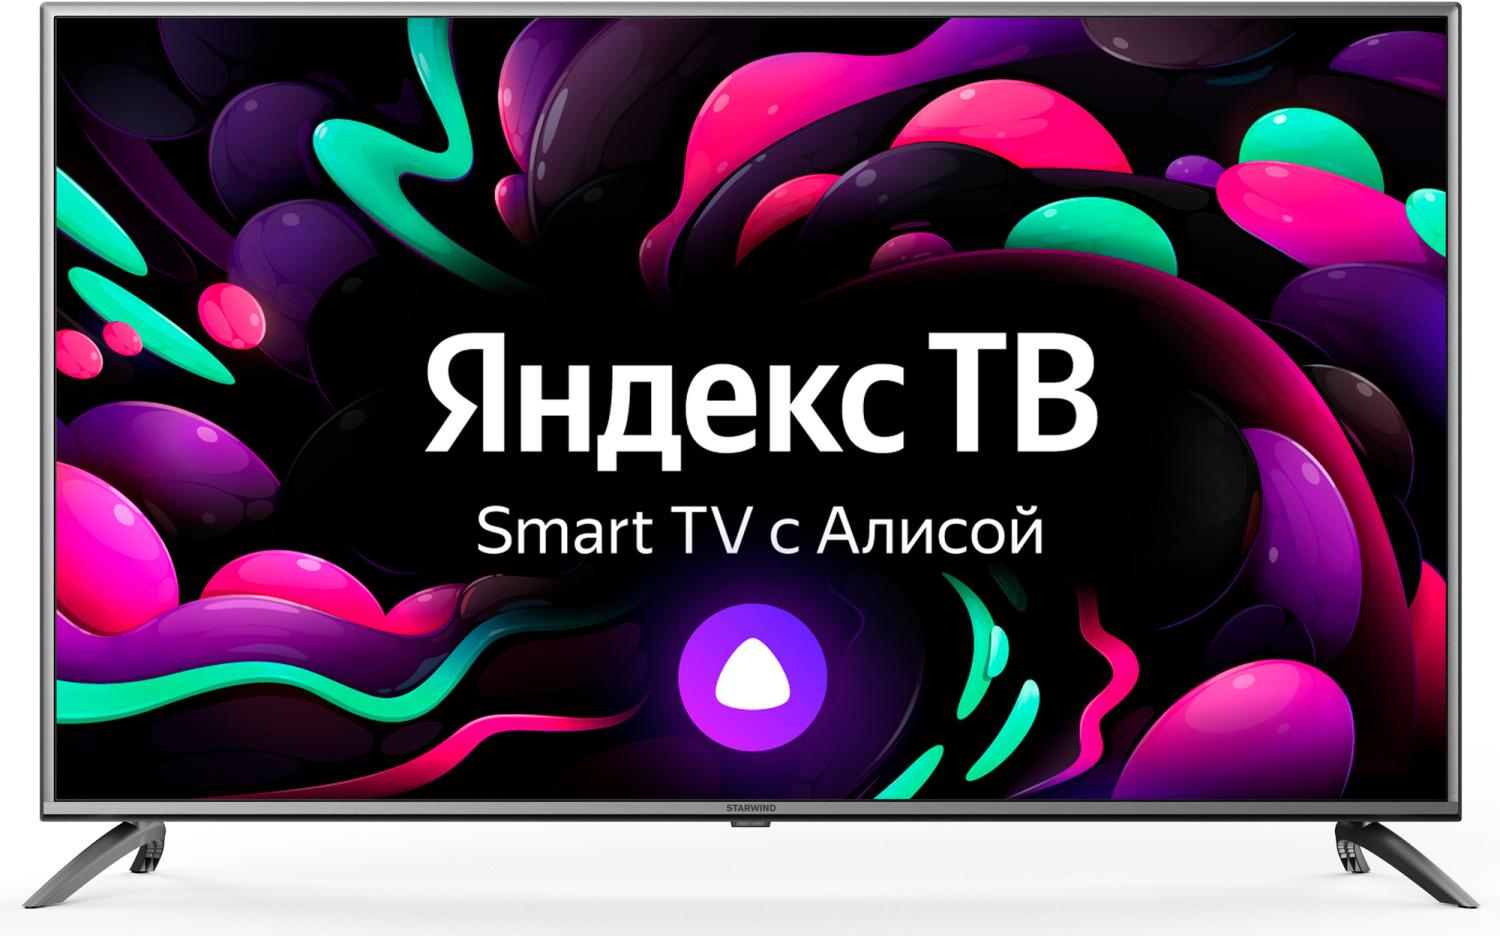 Телевизор 55" Starwind SW-LED55UG400 Smart Яндекс.ТВ стальной/4K Ultra HD/DVB-T2